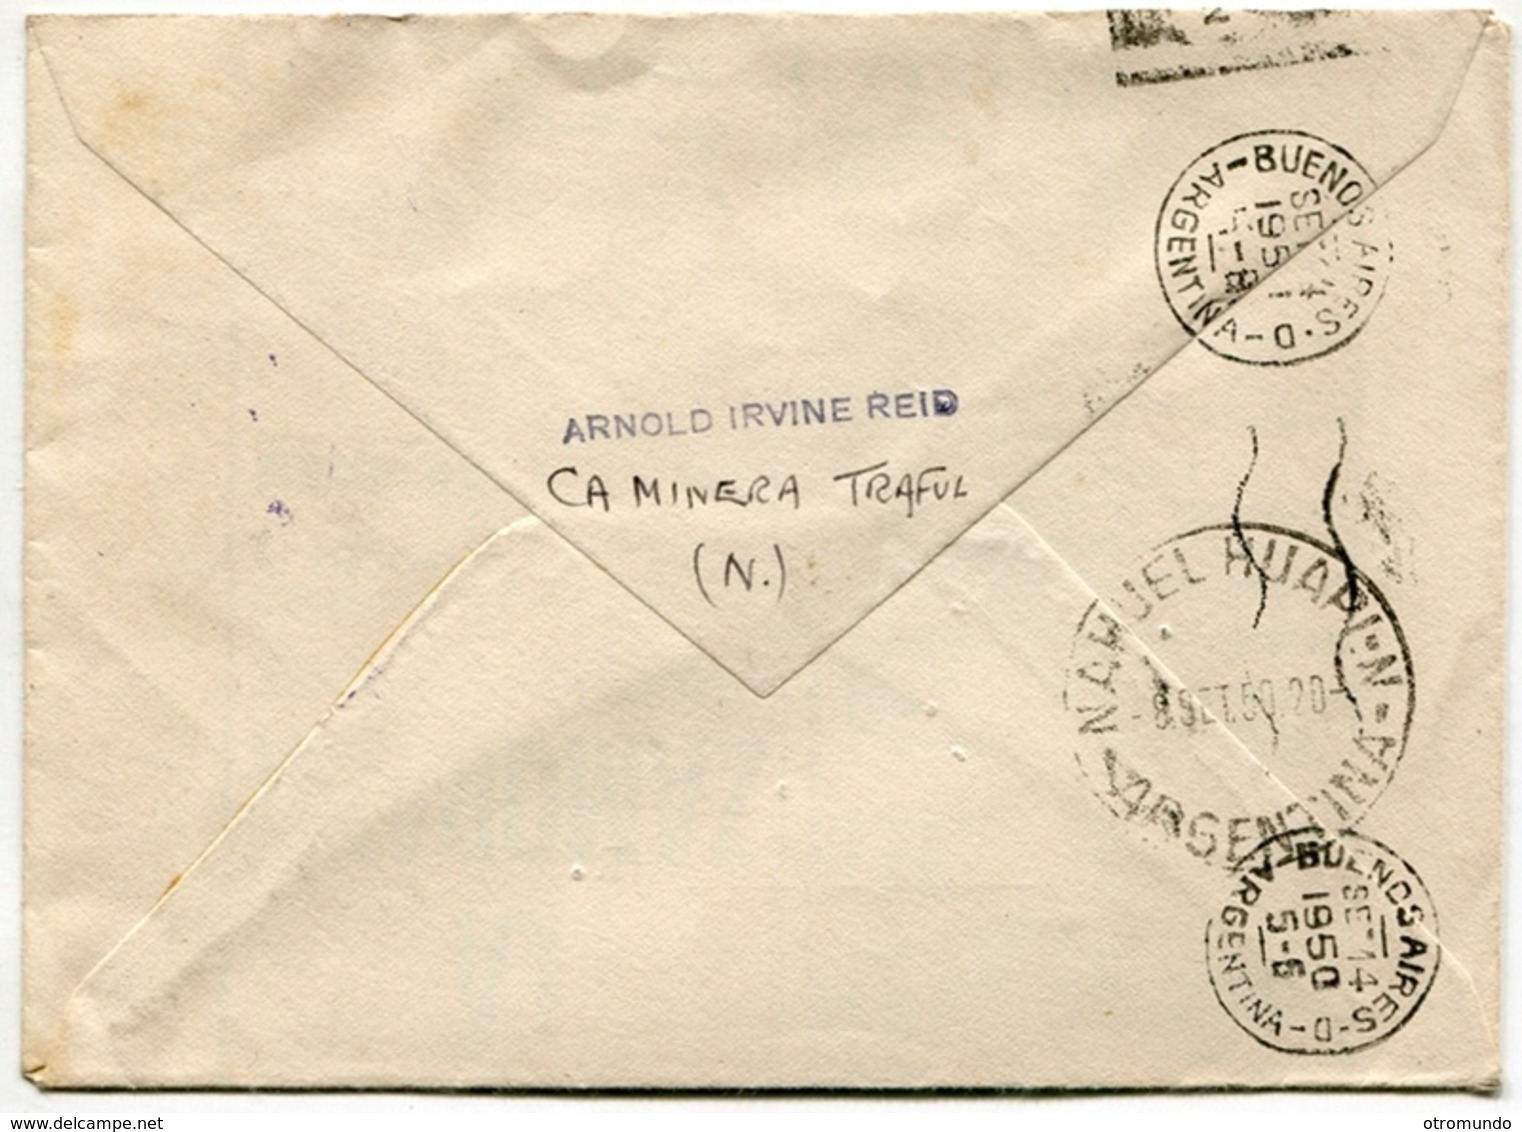 Unopened Envelope Sobre Sin Abrir Matasellos Caminera Traful Nahuel Huapi Neuquen Argentina 1950 - Used Stamps